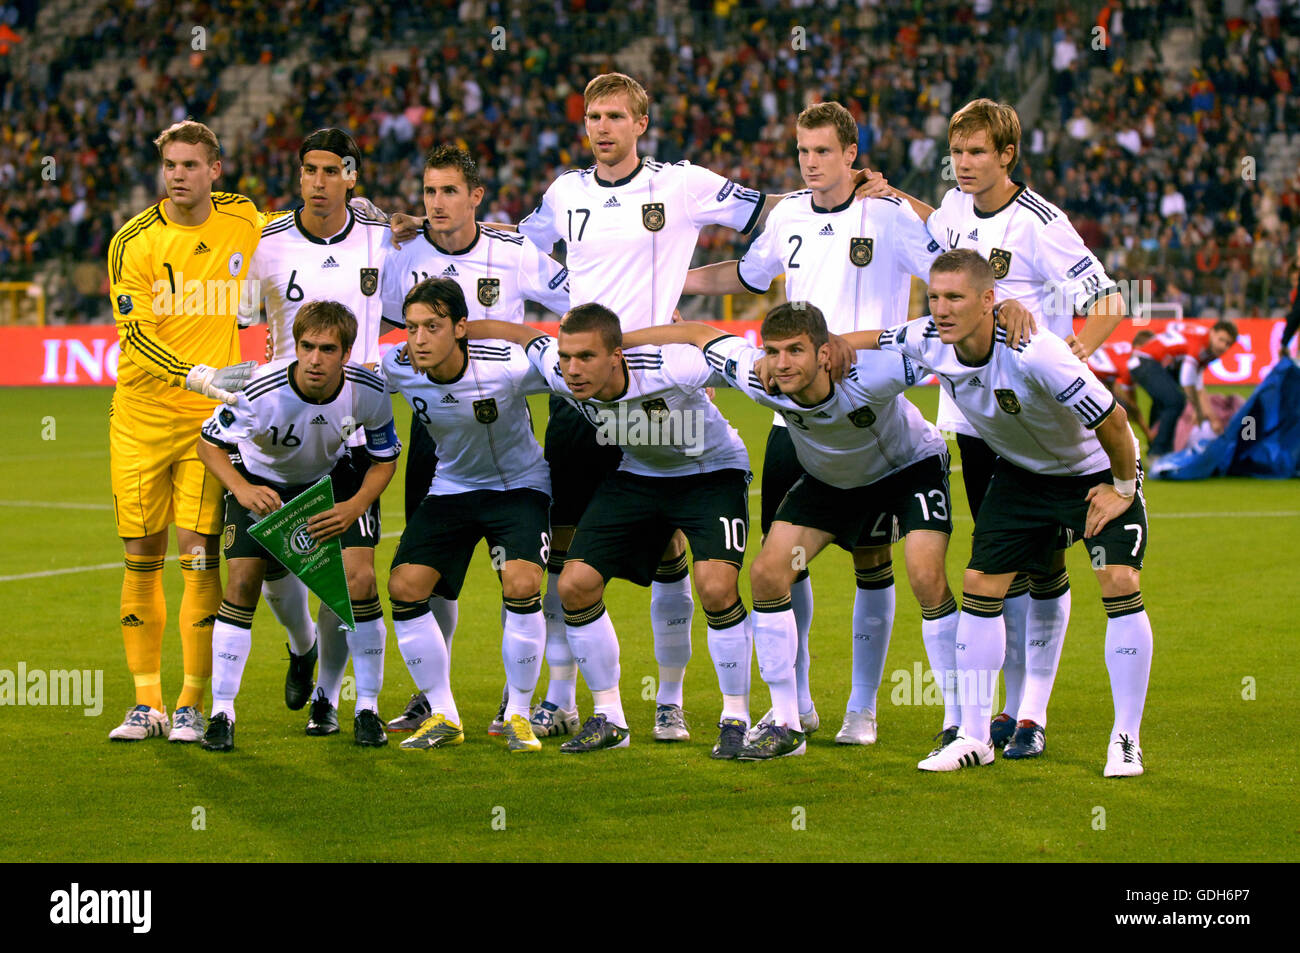 Team photo of Germany's national team, UEFA European Football Championship 2012 qualifier, Belgium vs Germany 0-1 Stock Photo